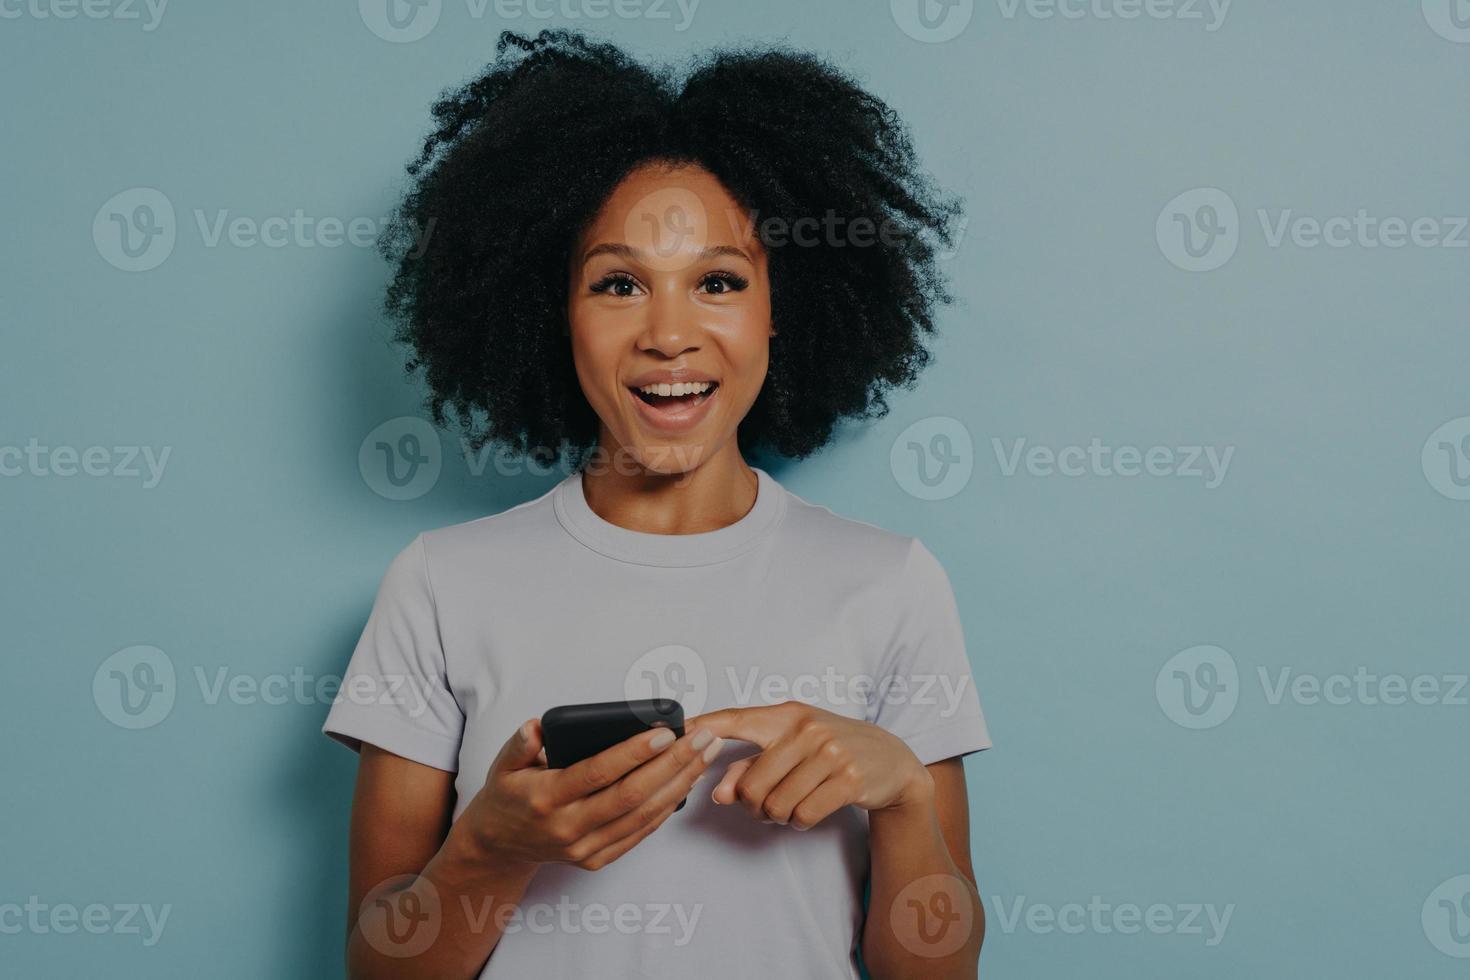 mooi gelukkig donker gevild meisje met moderne smartphone en online chatten met vriend foto